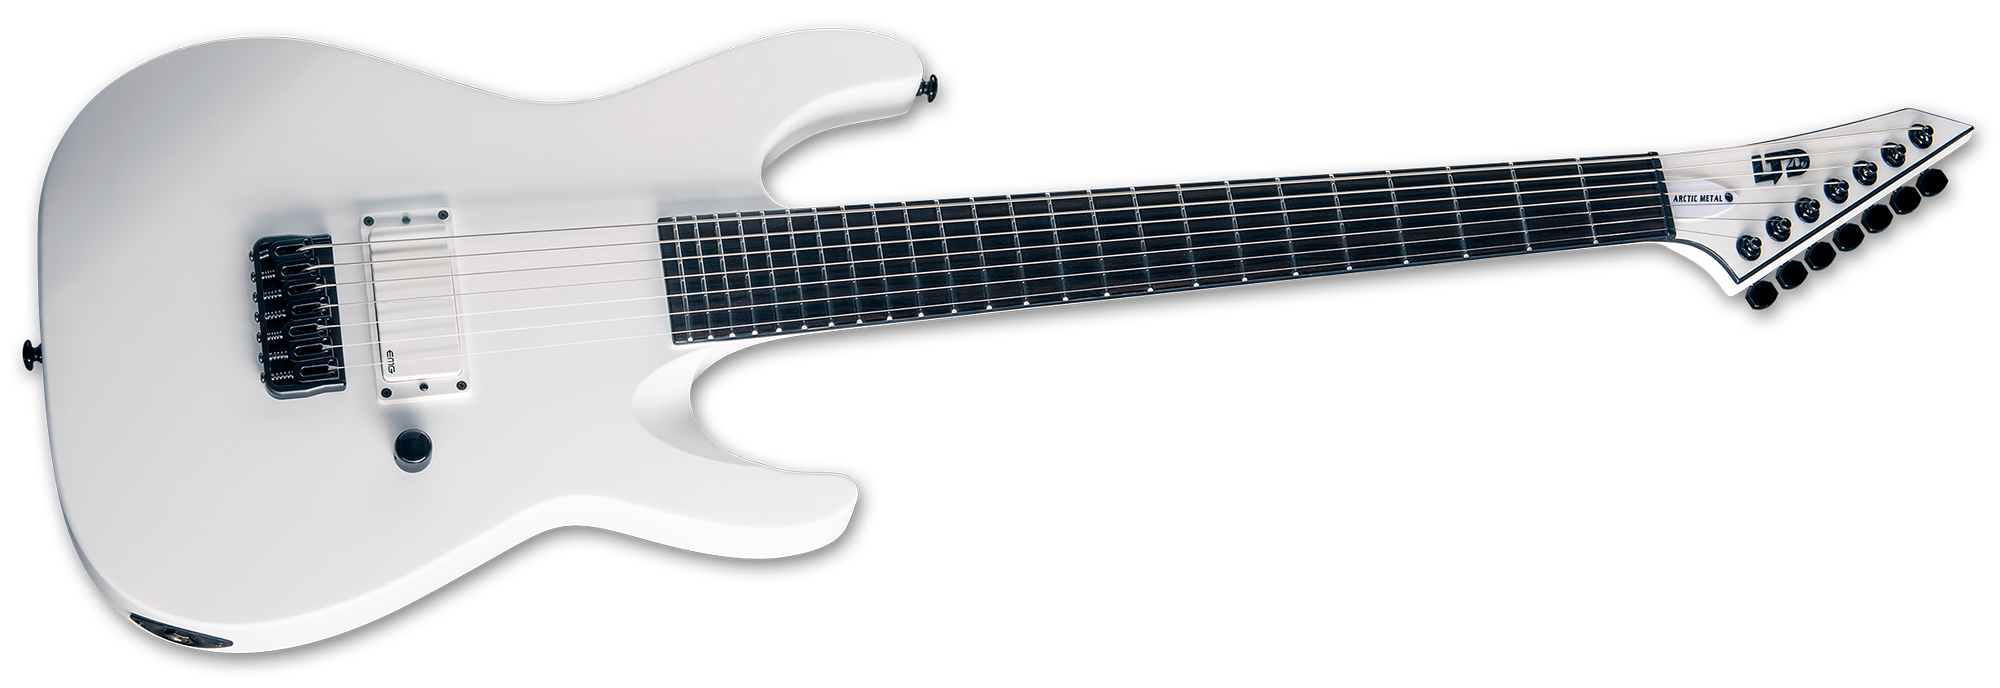 Ltd M-7ht Baritone Arctic Metal 7c H Emg Ht Eb - Snow White Satin - 7 string electric guitar - Variation 1